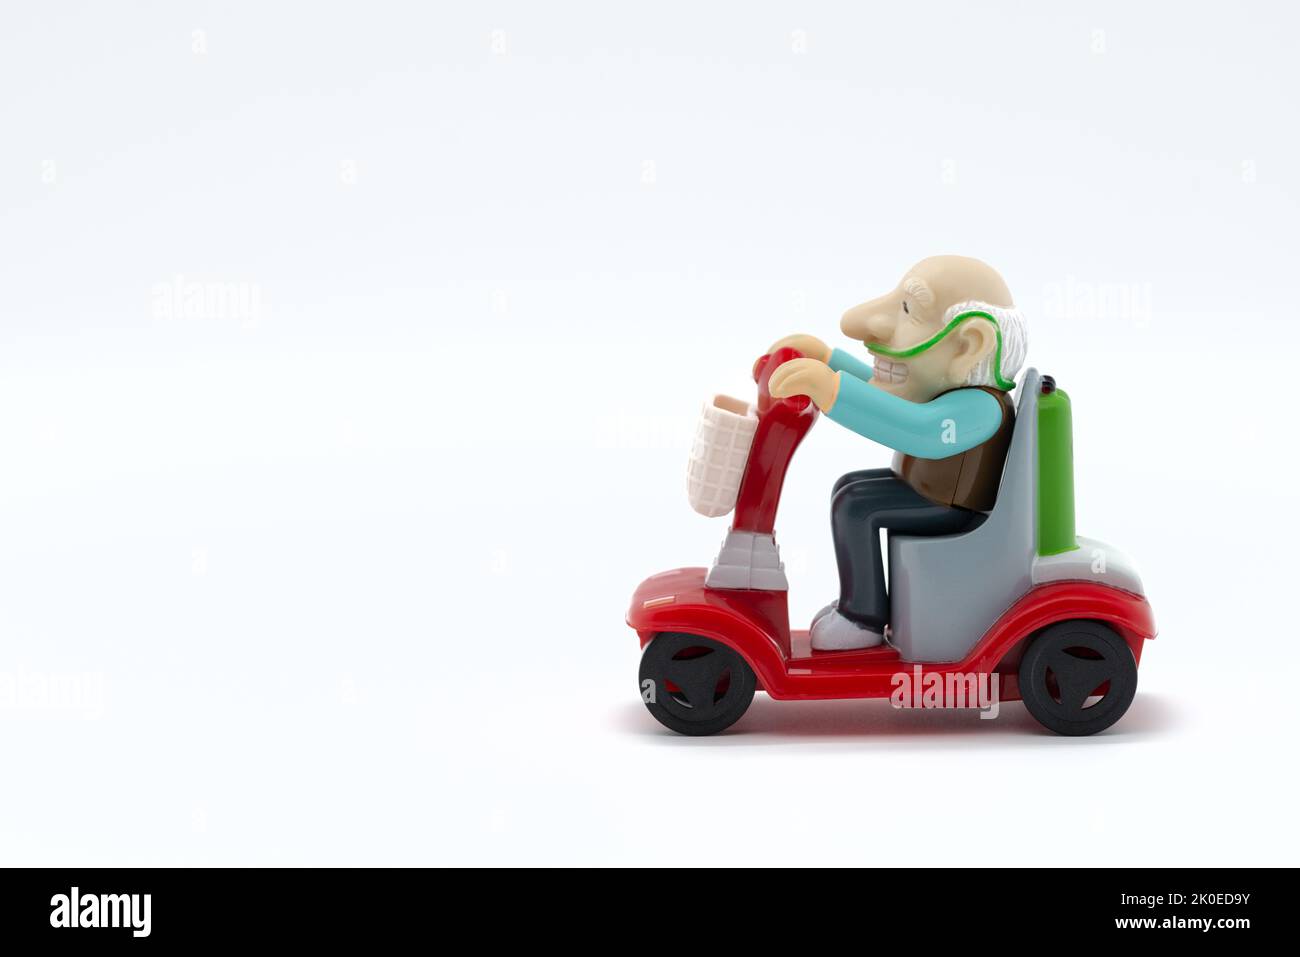 Grandfather on motorized wheelchair, toys, white background, cropped image Stock Photo